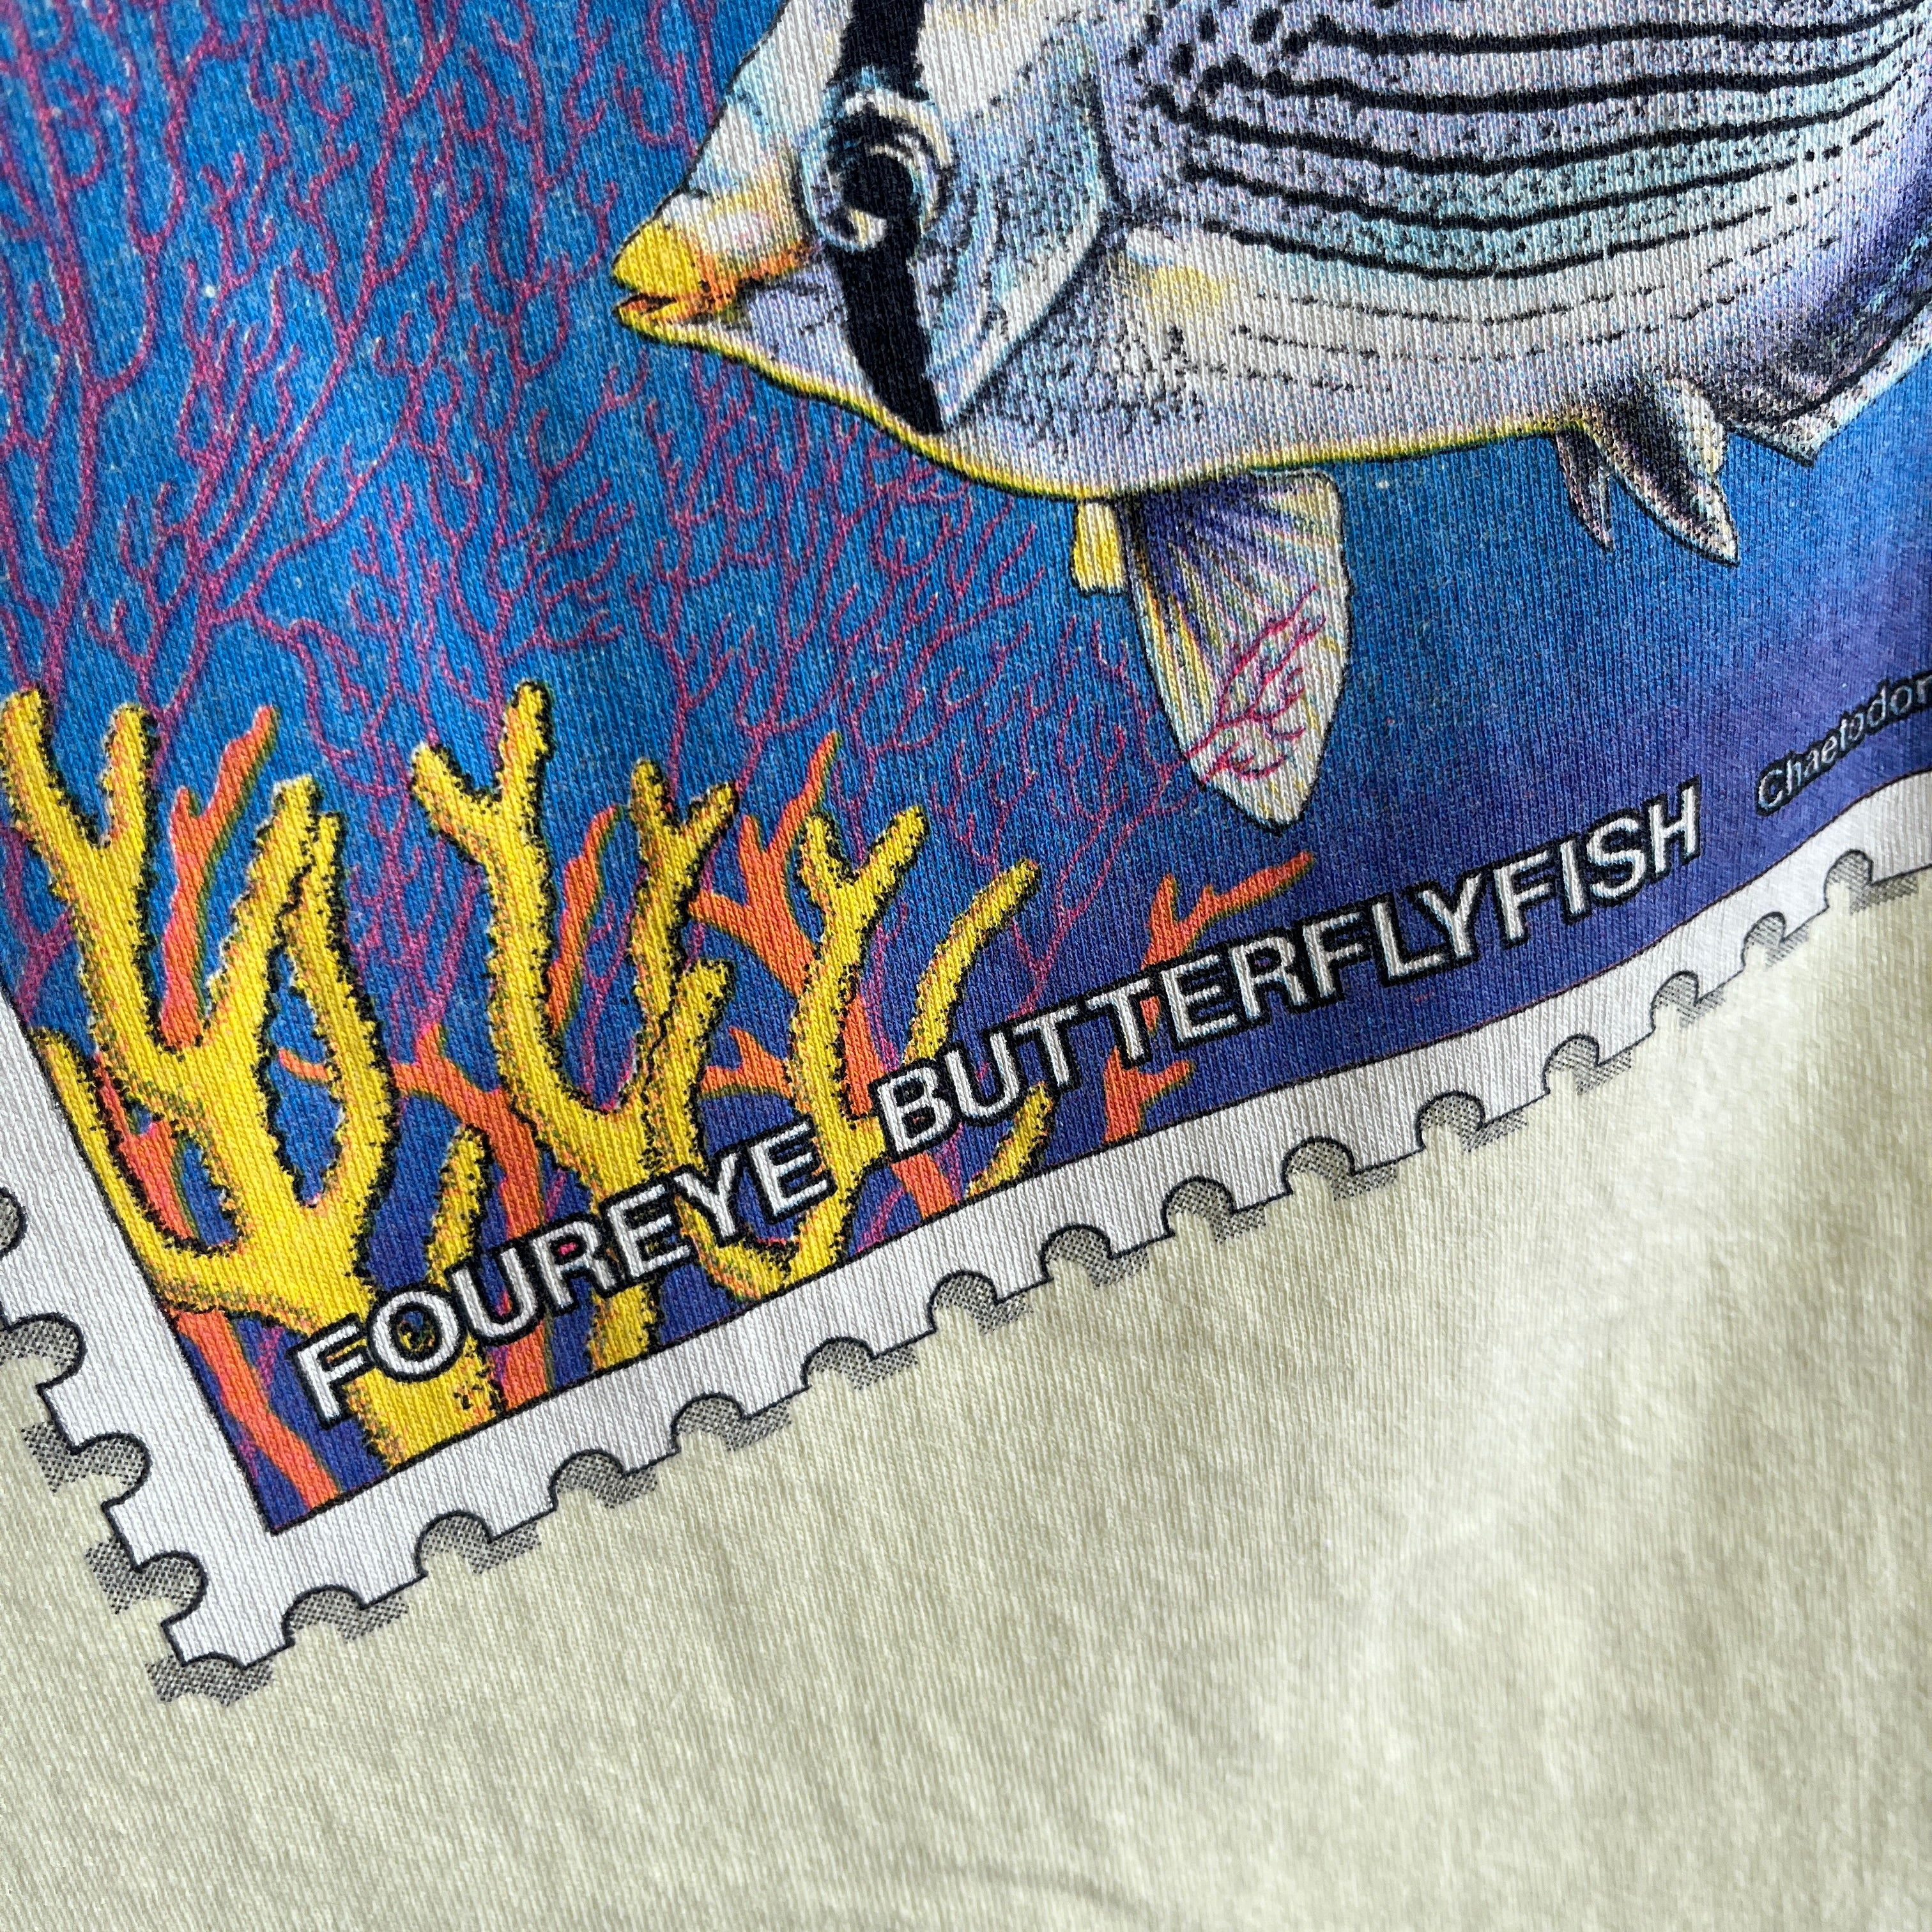 July 4, 1988 Grand Cayman Islands Foureye Butterflyfish T-Shirt